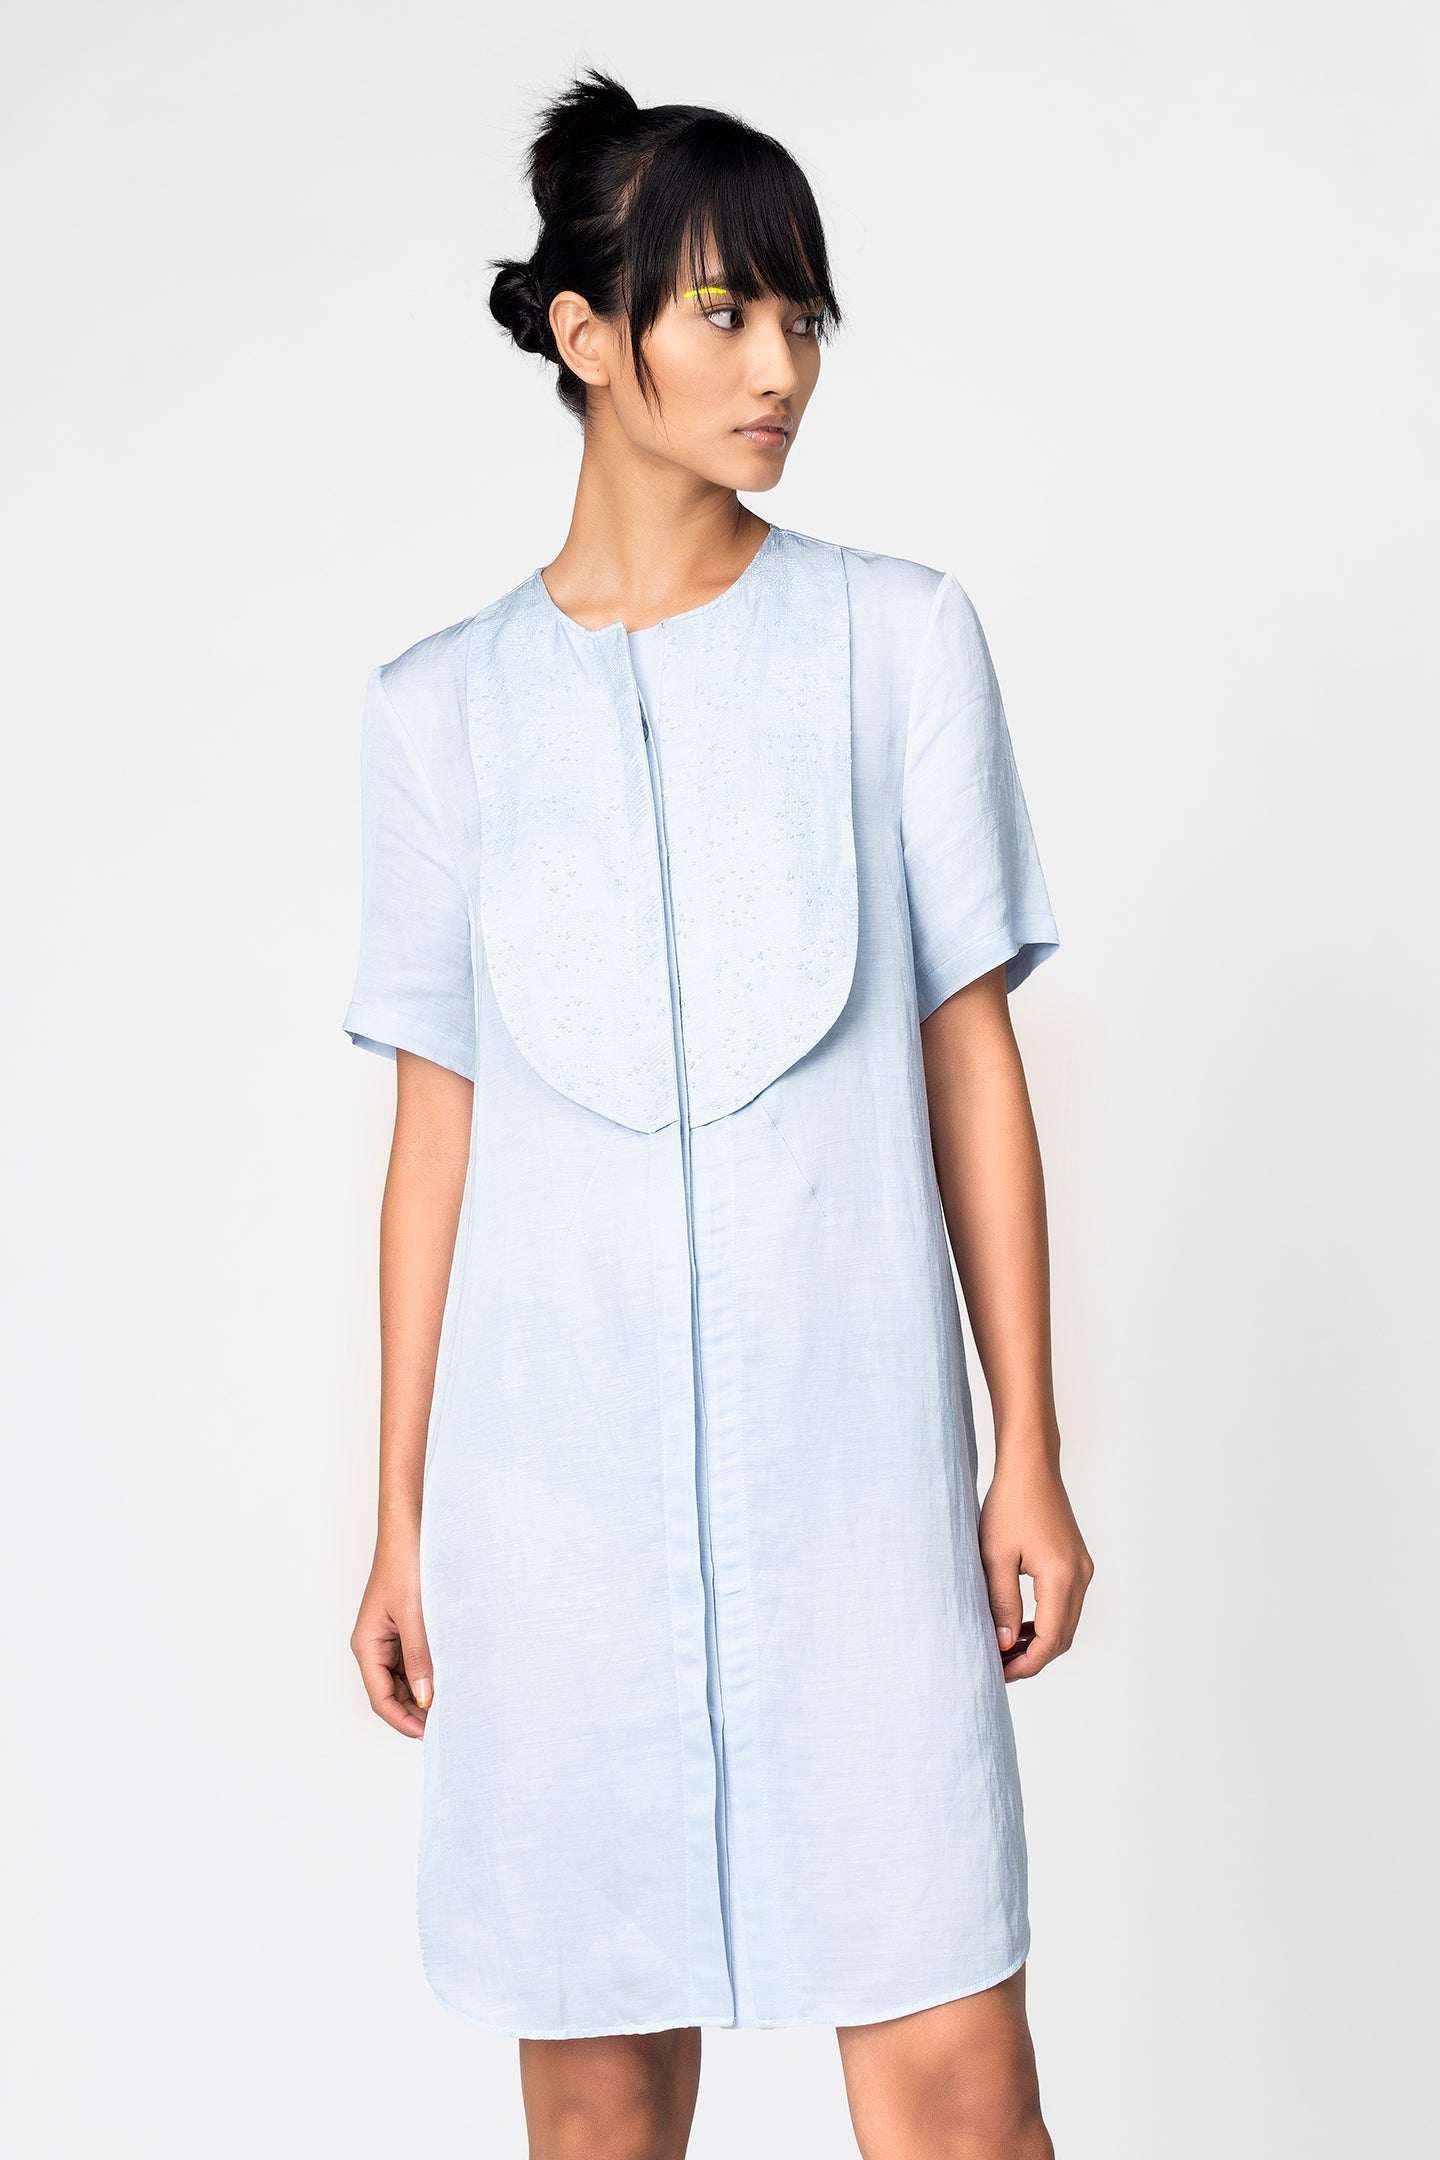 embroidered-yoke-dress - Genes online store 2020